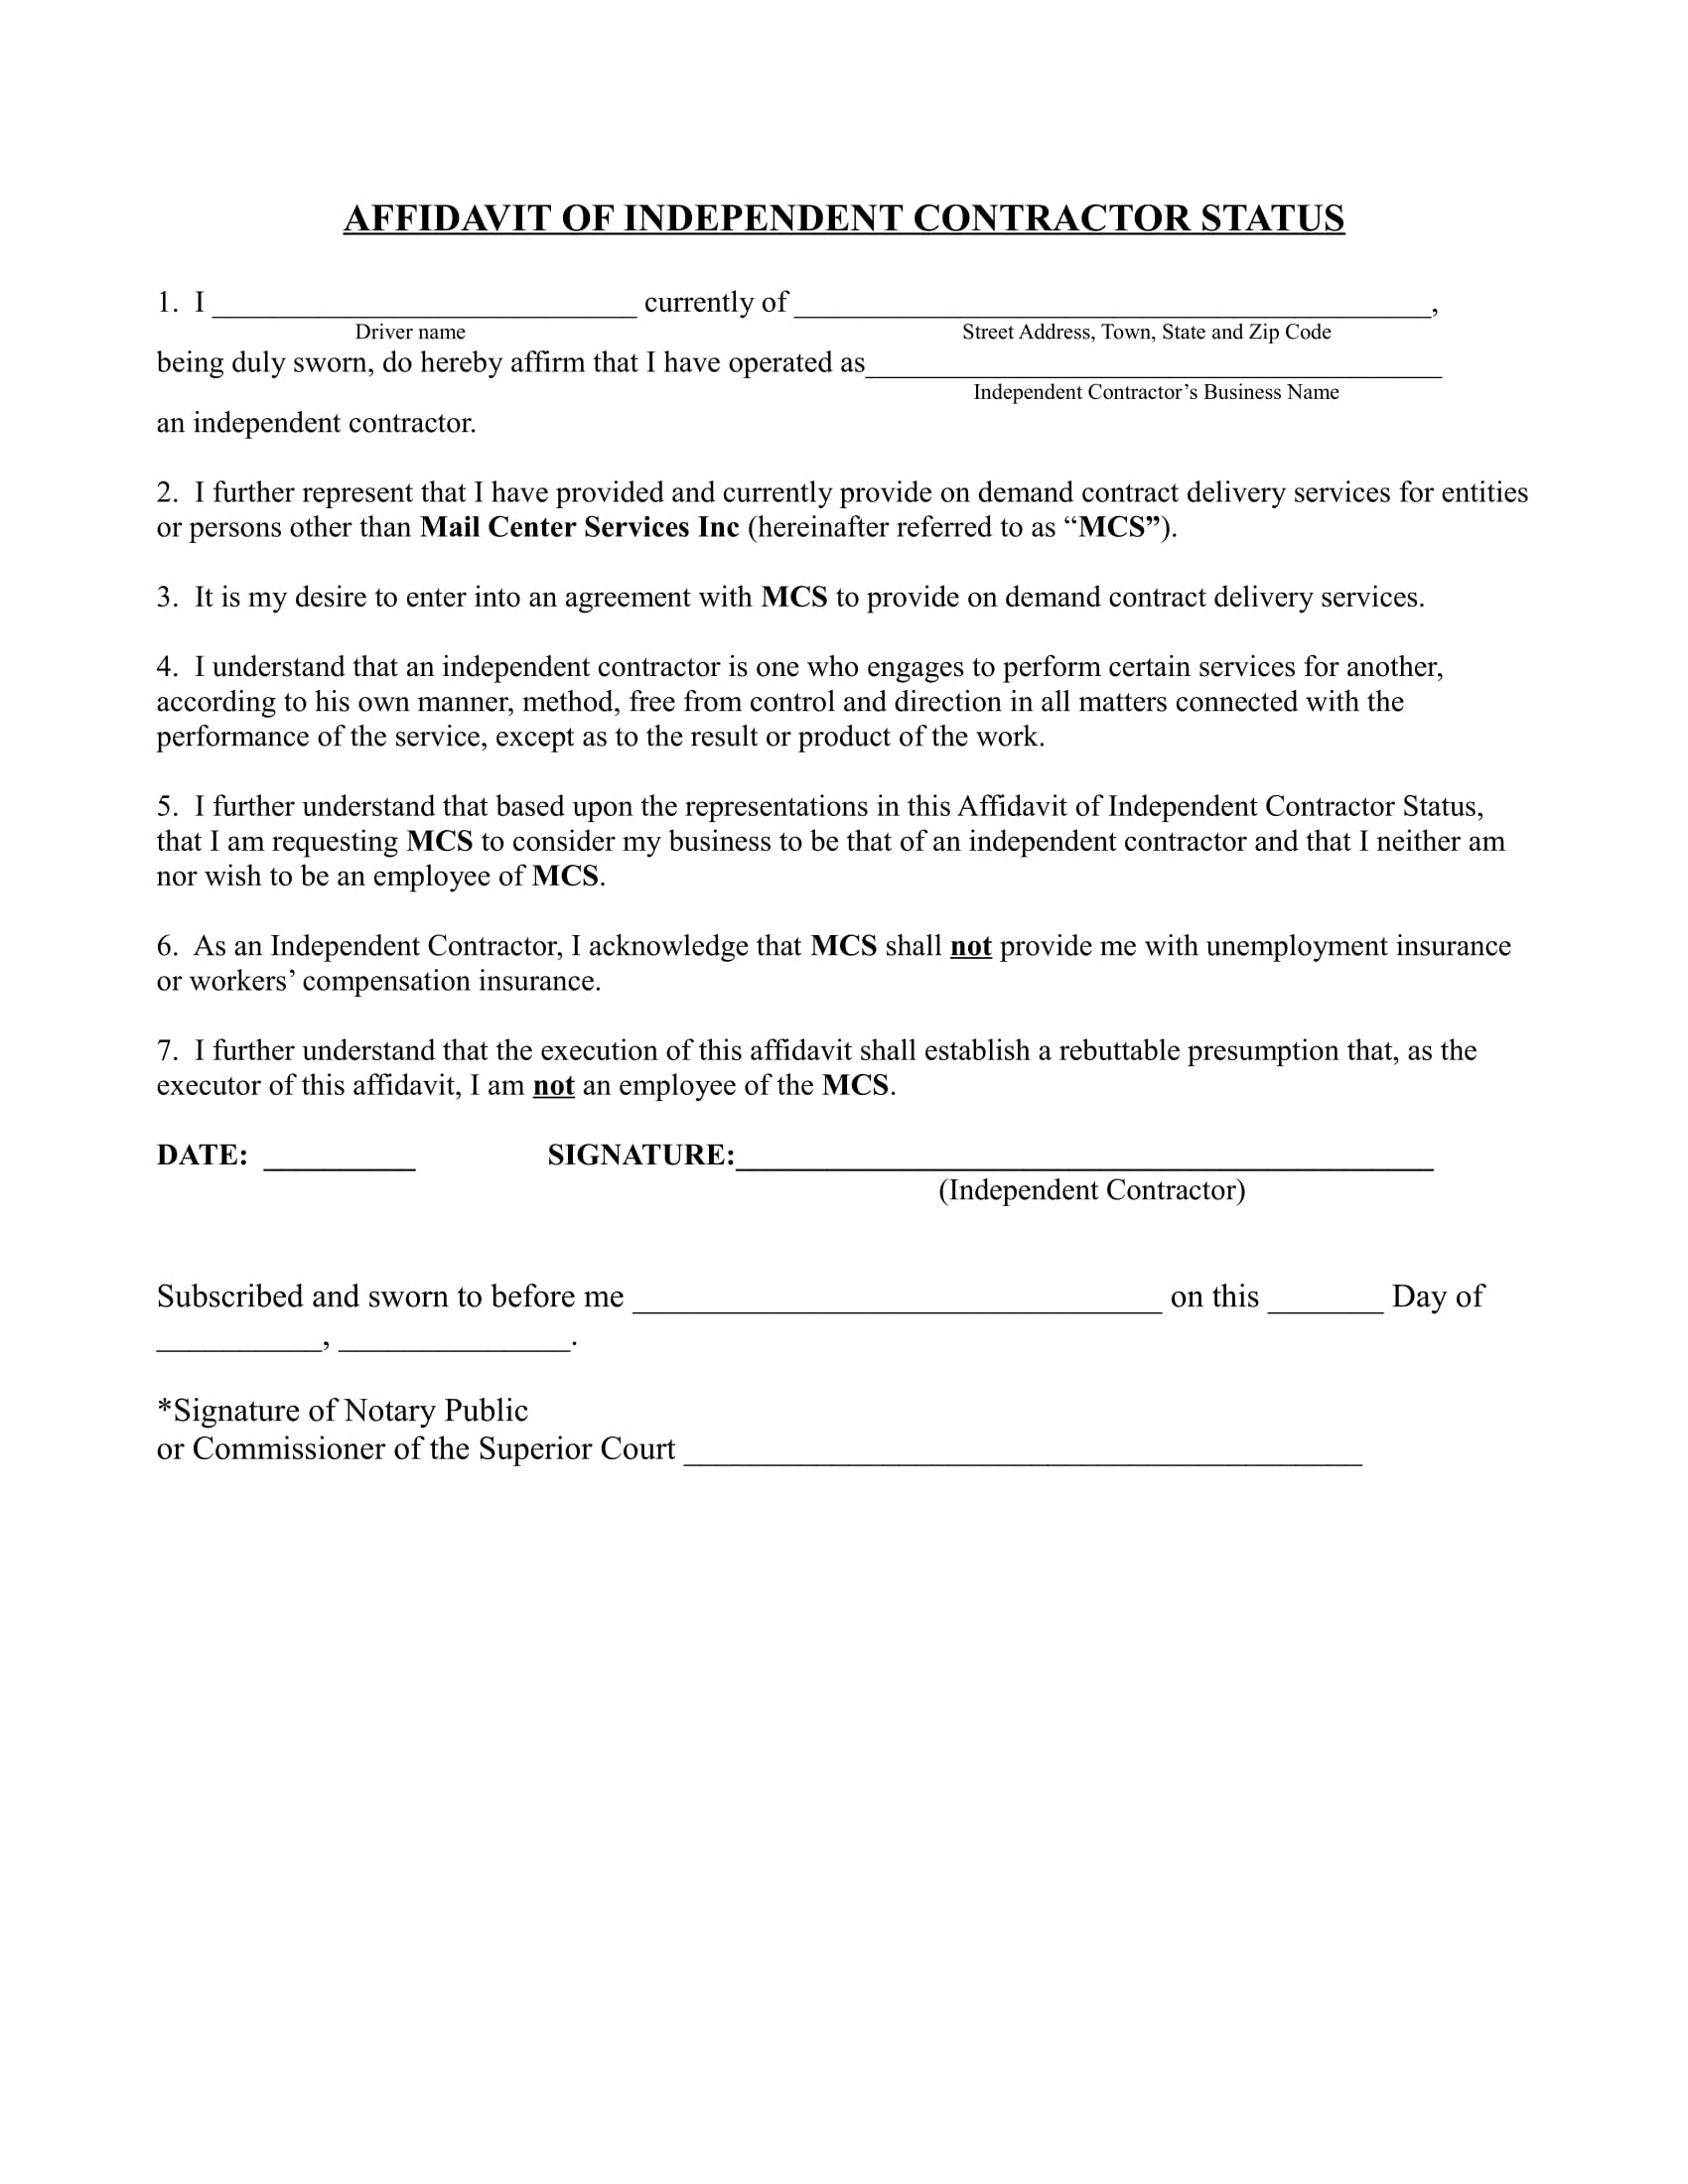 independent contractor affidavit form 1